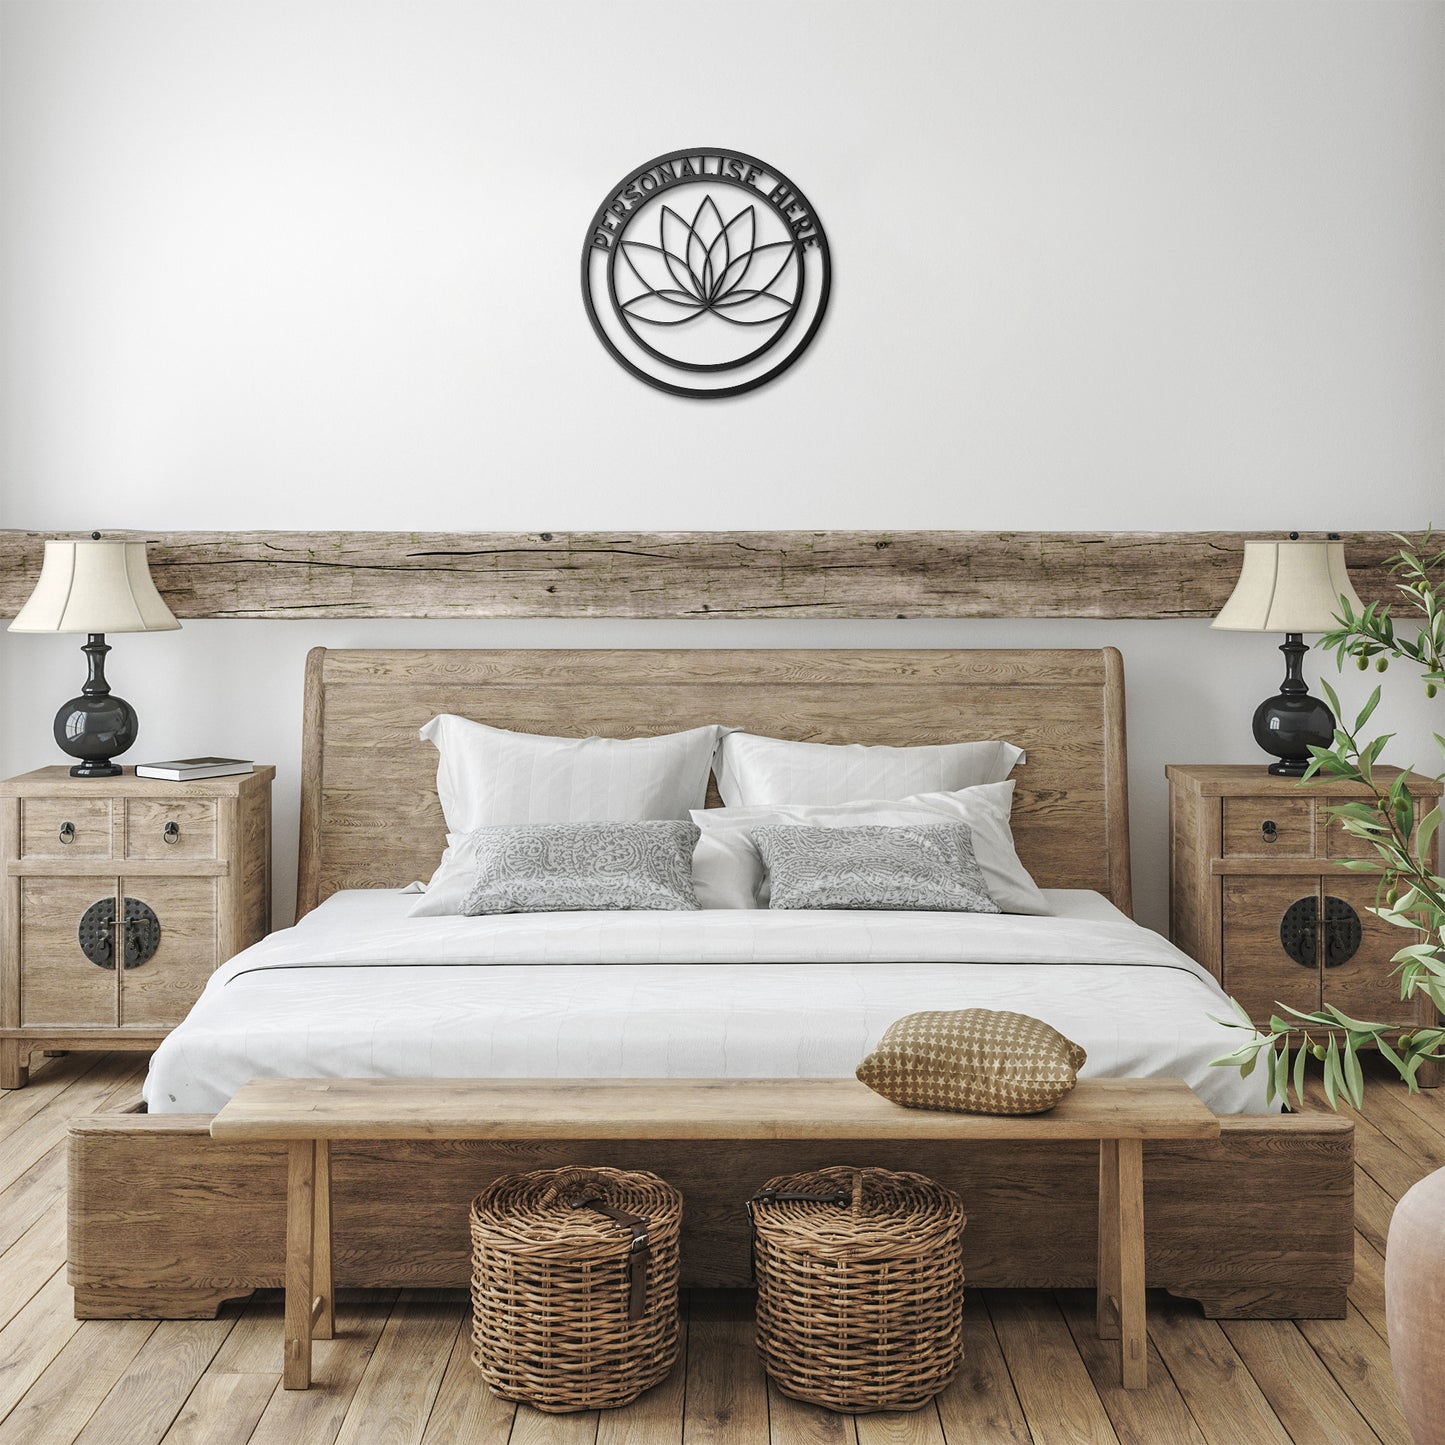 Personalized Lotus Metal Sign - Customised Lotus Wall Decor, Lotus Metal Signs Customized Outdoor Indoor